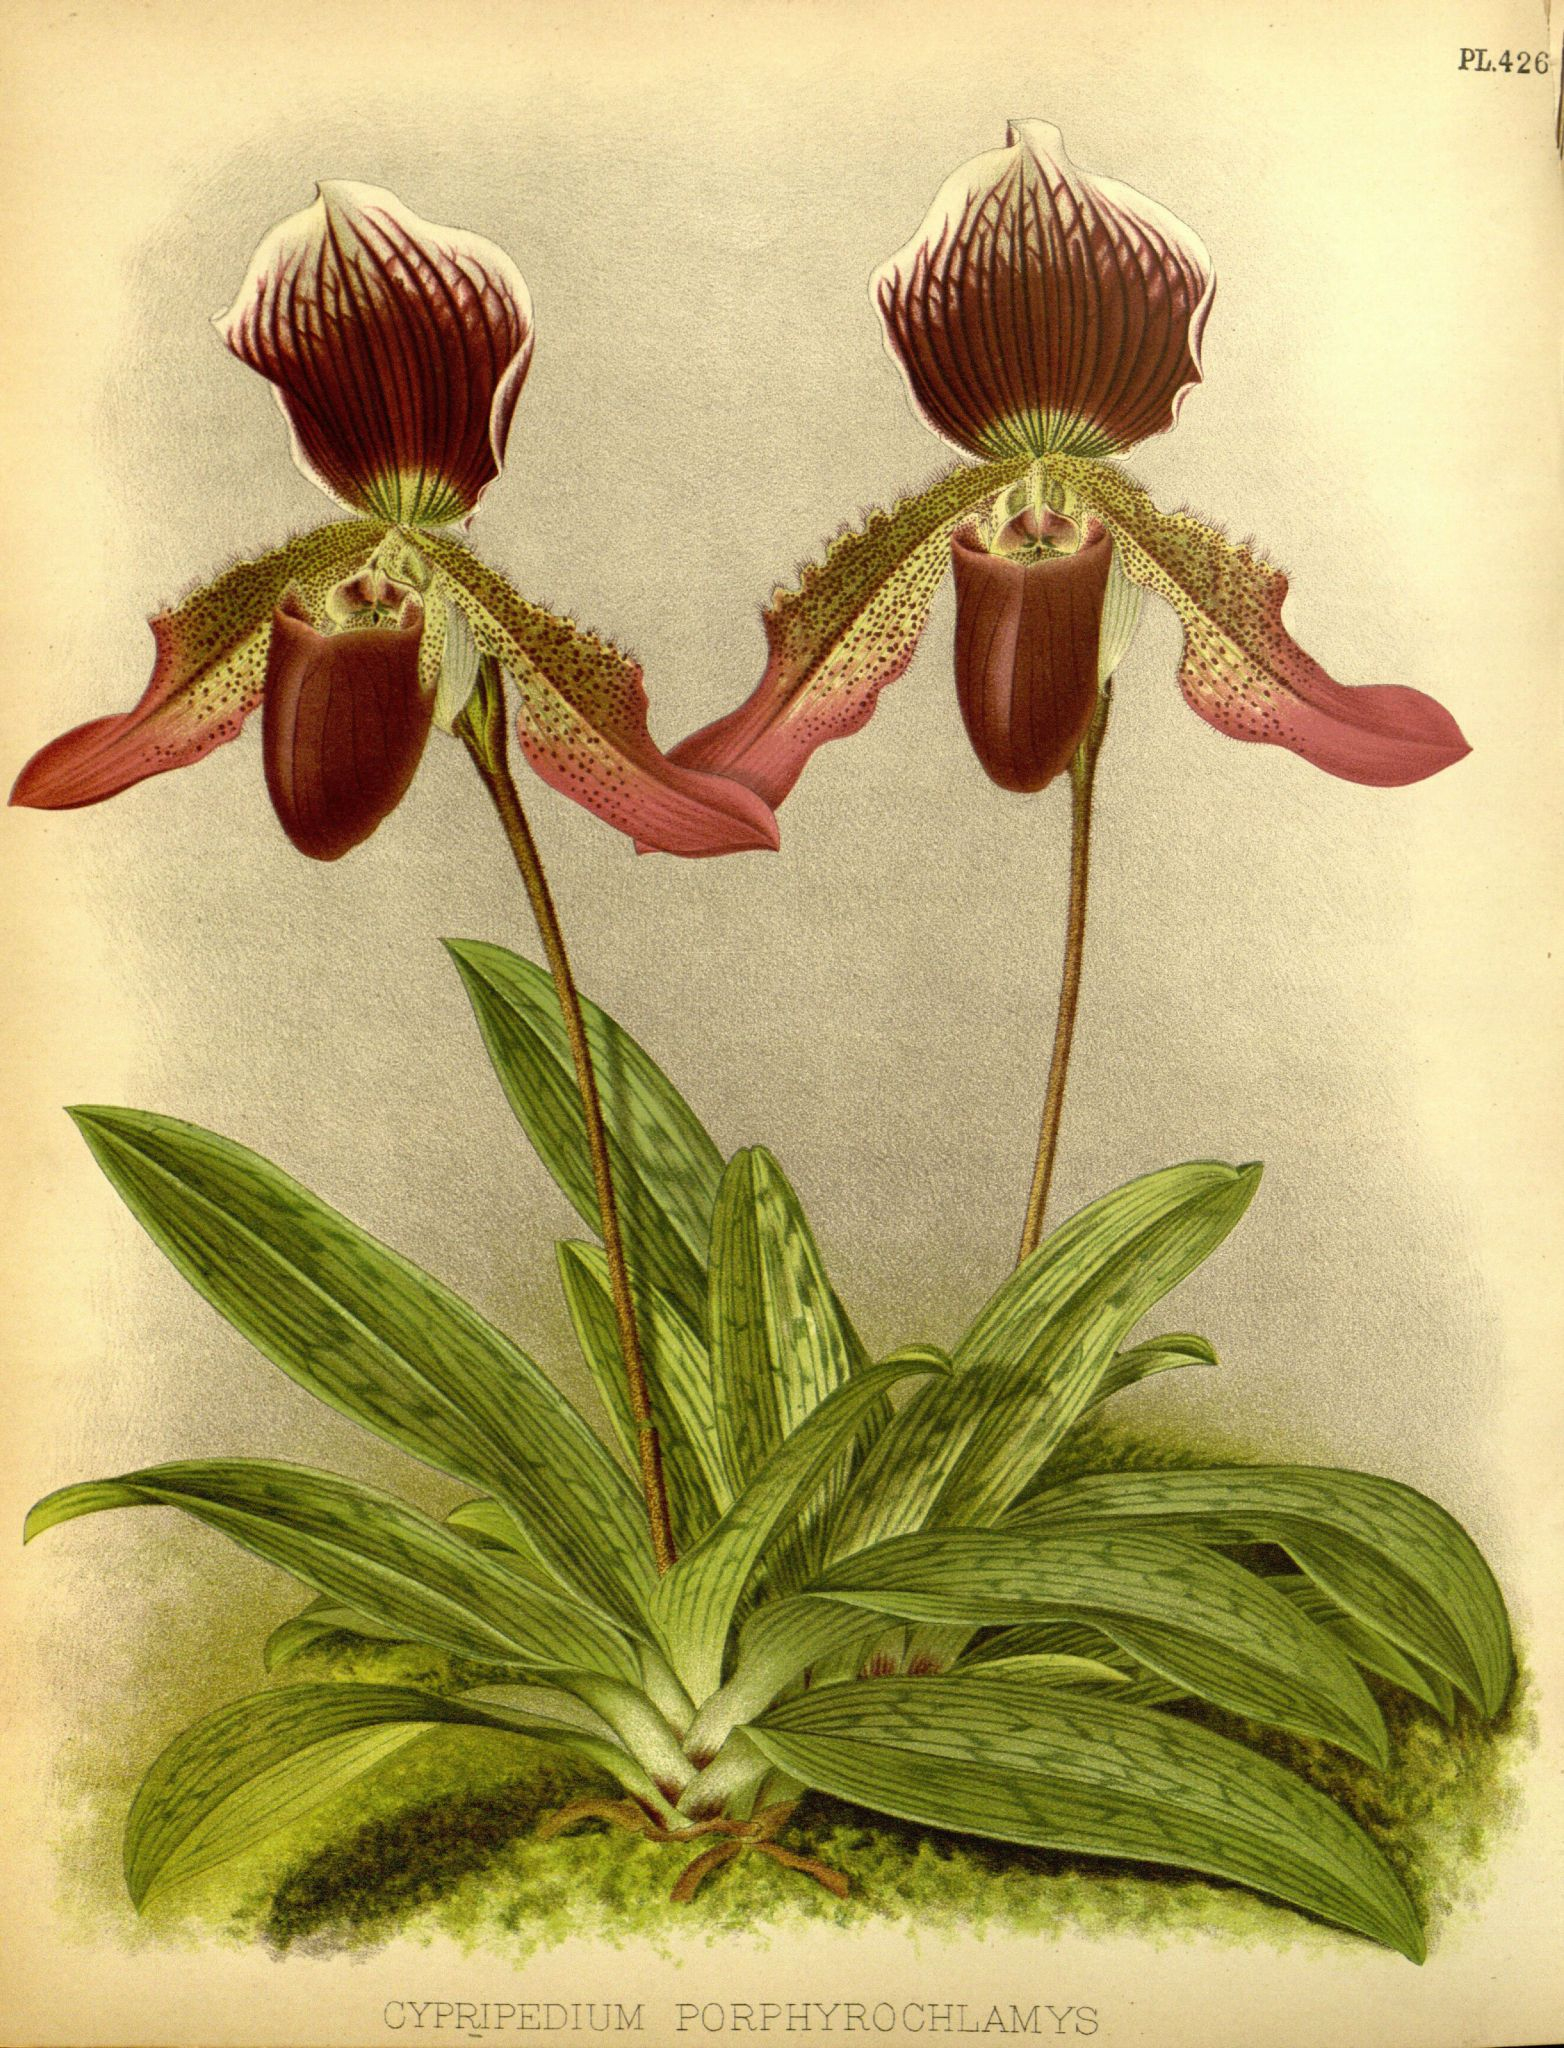 Orchidees - Orchidees - 9153 Cypripedium Porphyrochlamys encequiconcerne Orchidée Dessin 